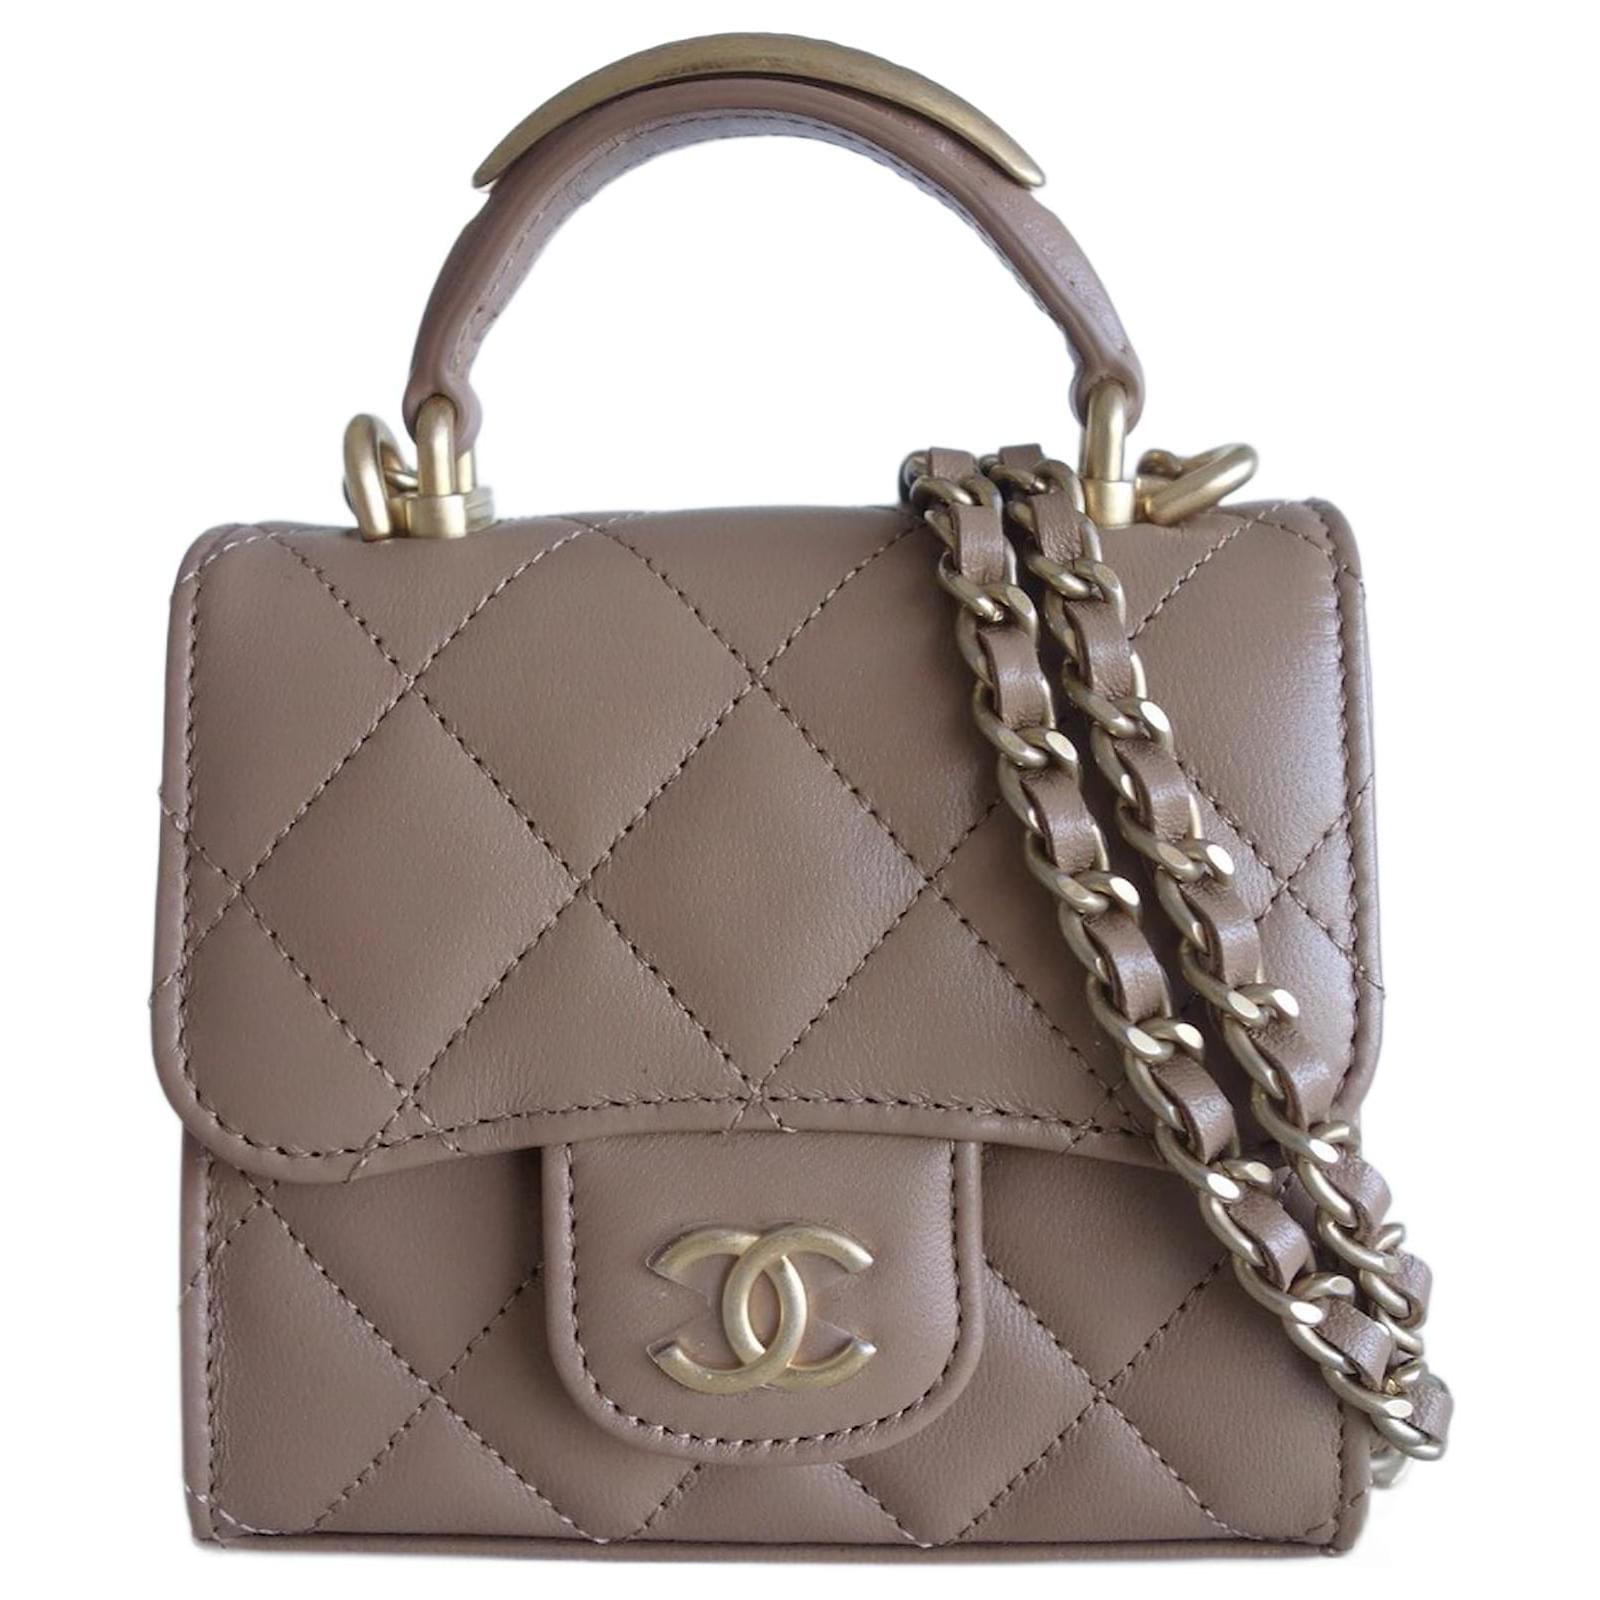 Handbags Chanel Beige Classic Chanel Mini Bag